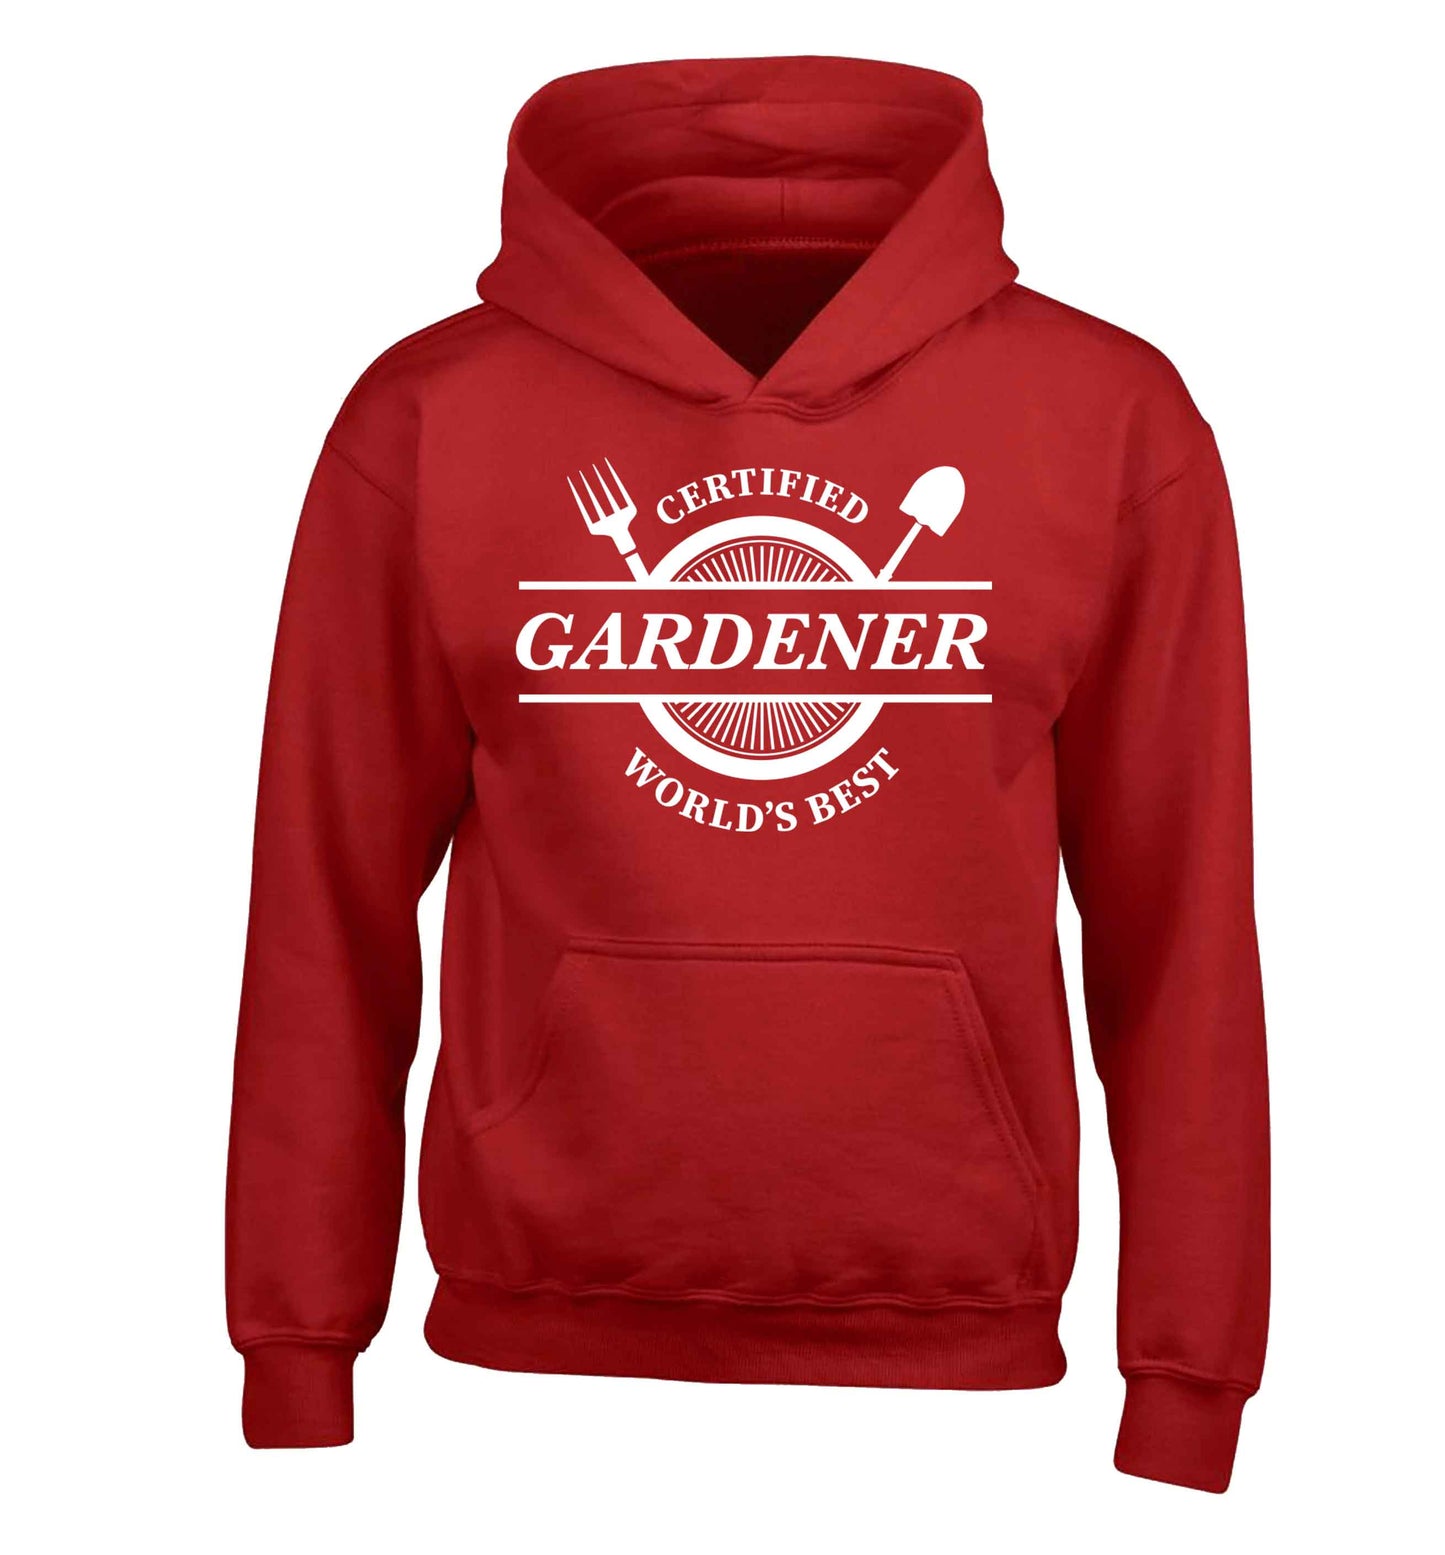 Certified gardener worlds best children's red hoodie 12-13 Years